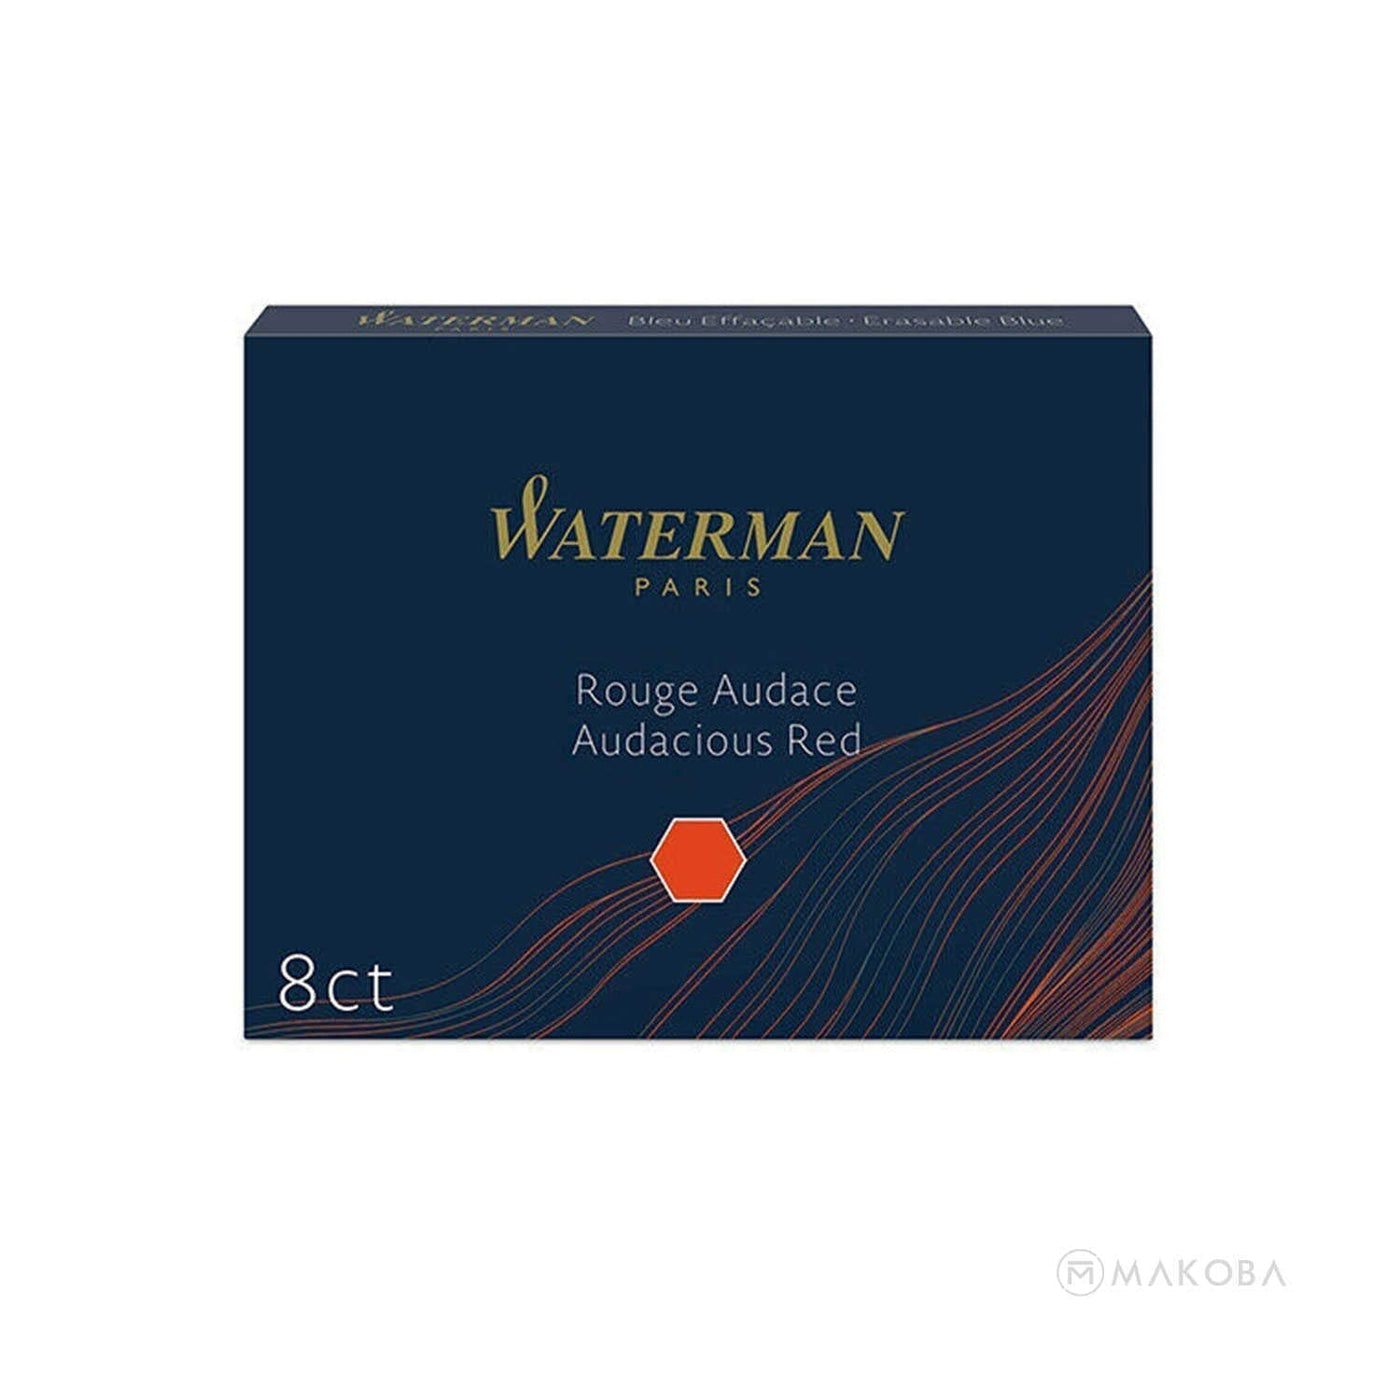 Waterman Long Ink Cartridge Pack of 8 - Audacious Red